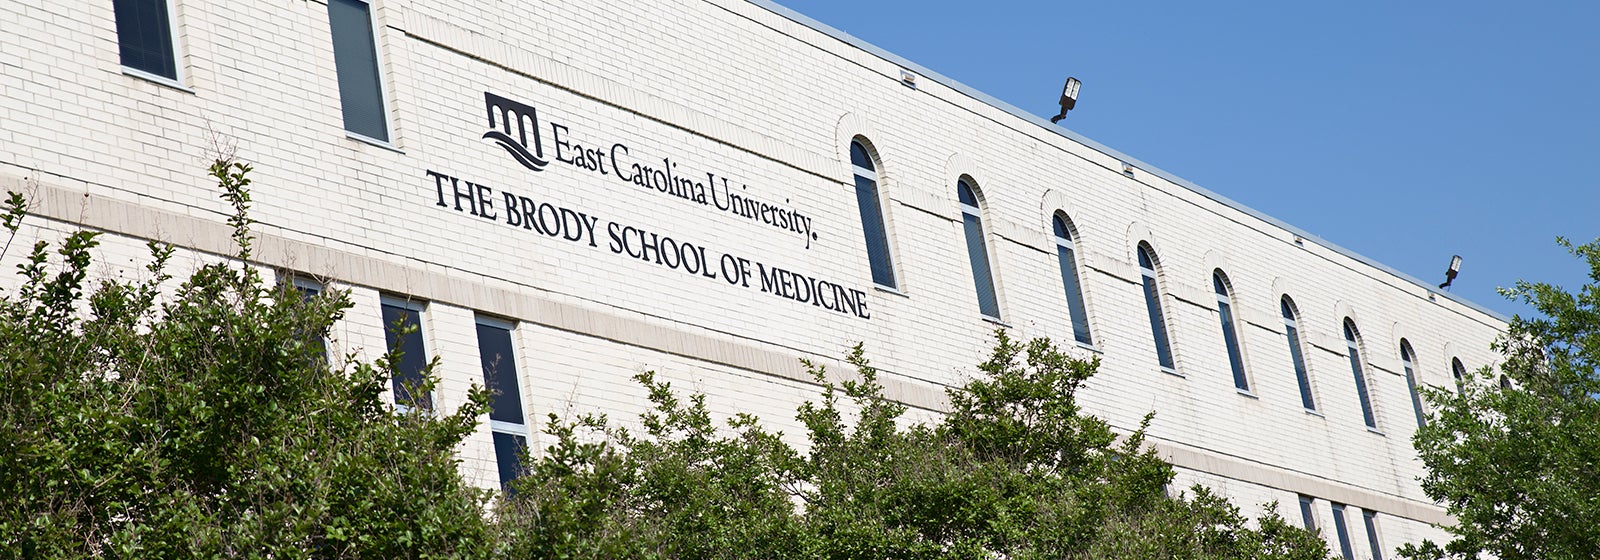 Brody School of Medicine (Photo by Gretchen Baugh)